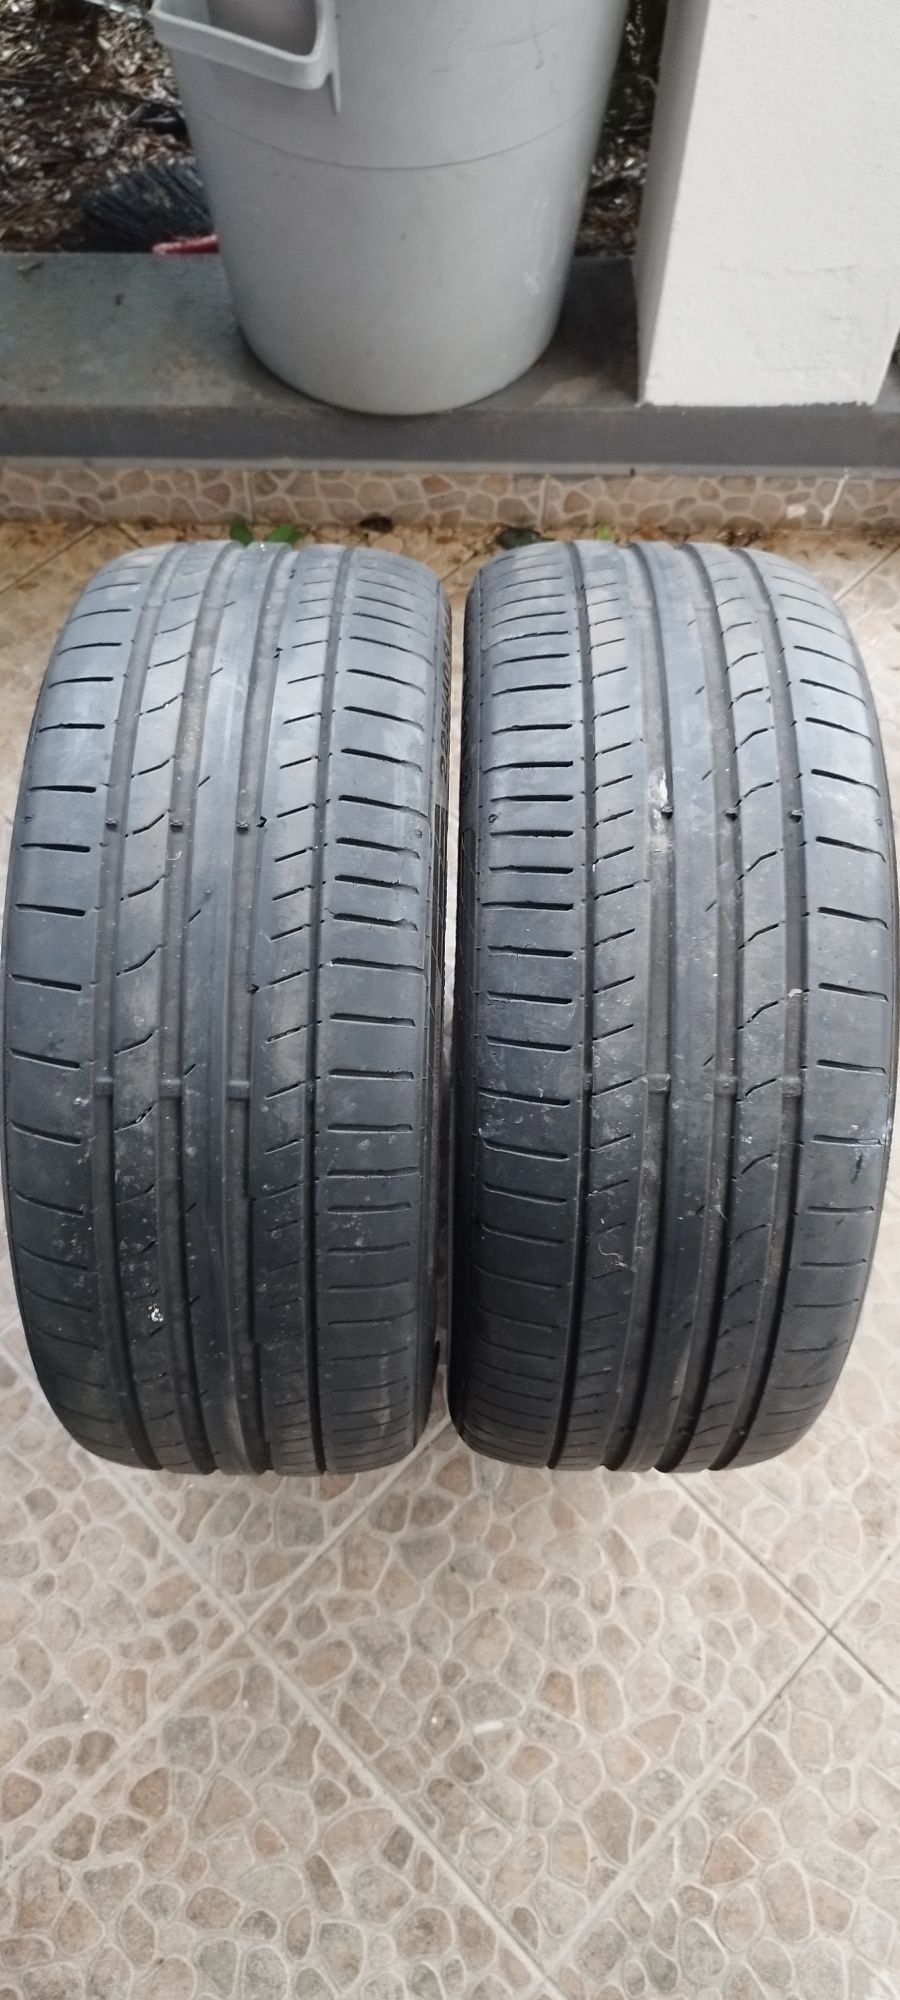 2 pneus Toyo proxes sport 265/35/18 igual a novos 2 225/40/18